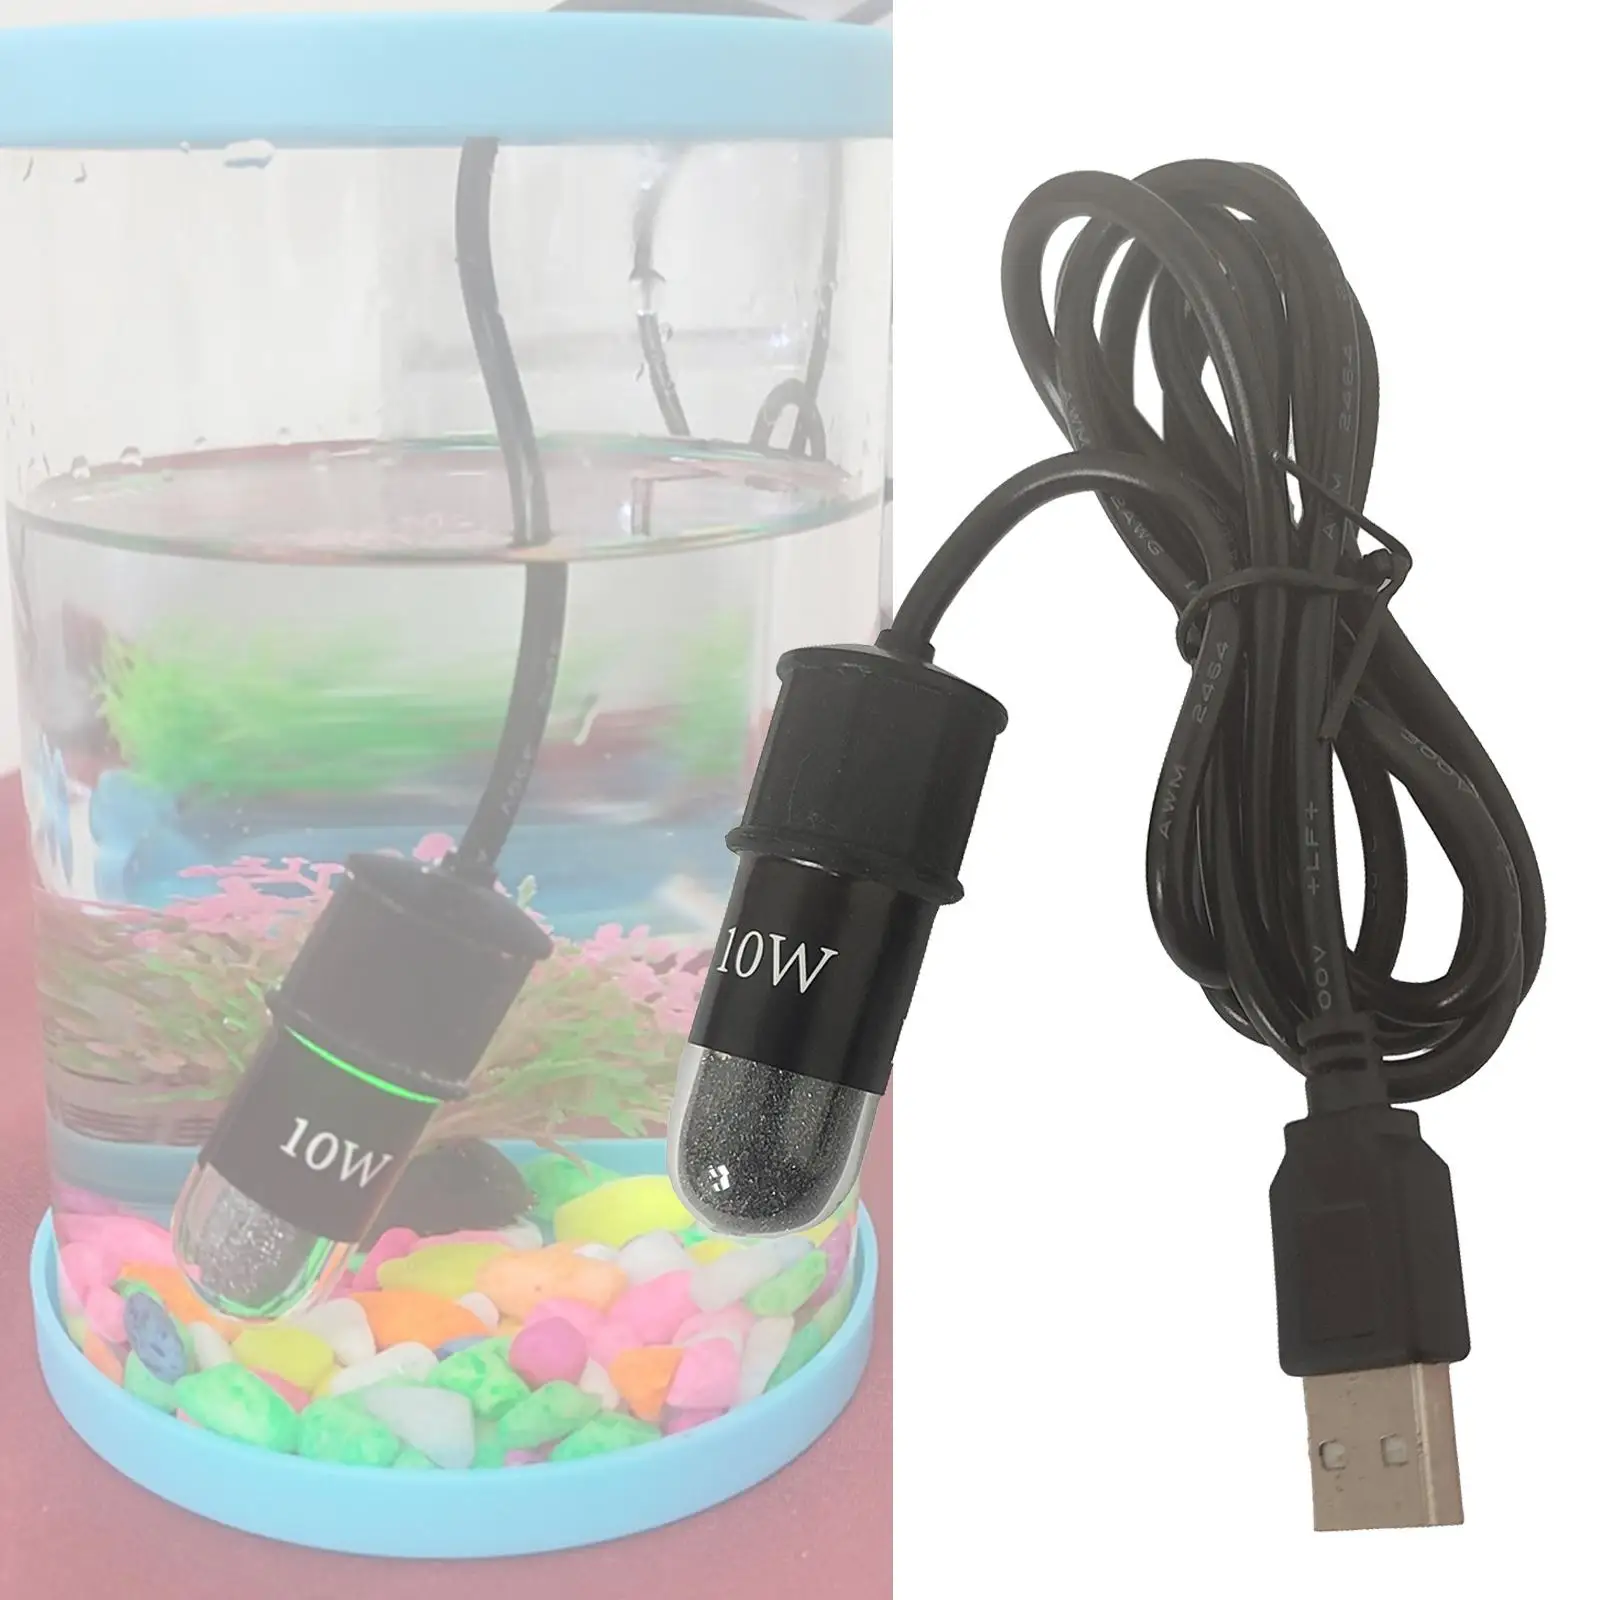 10W Mini Fish Tank Heater LED USB Heating Rod External Temperature Controller LED Display Fish Turtle Tank Heater Protection